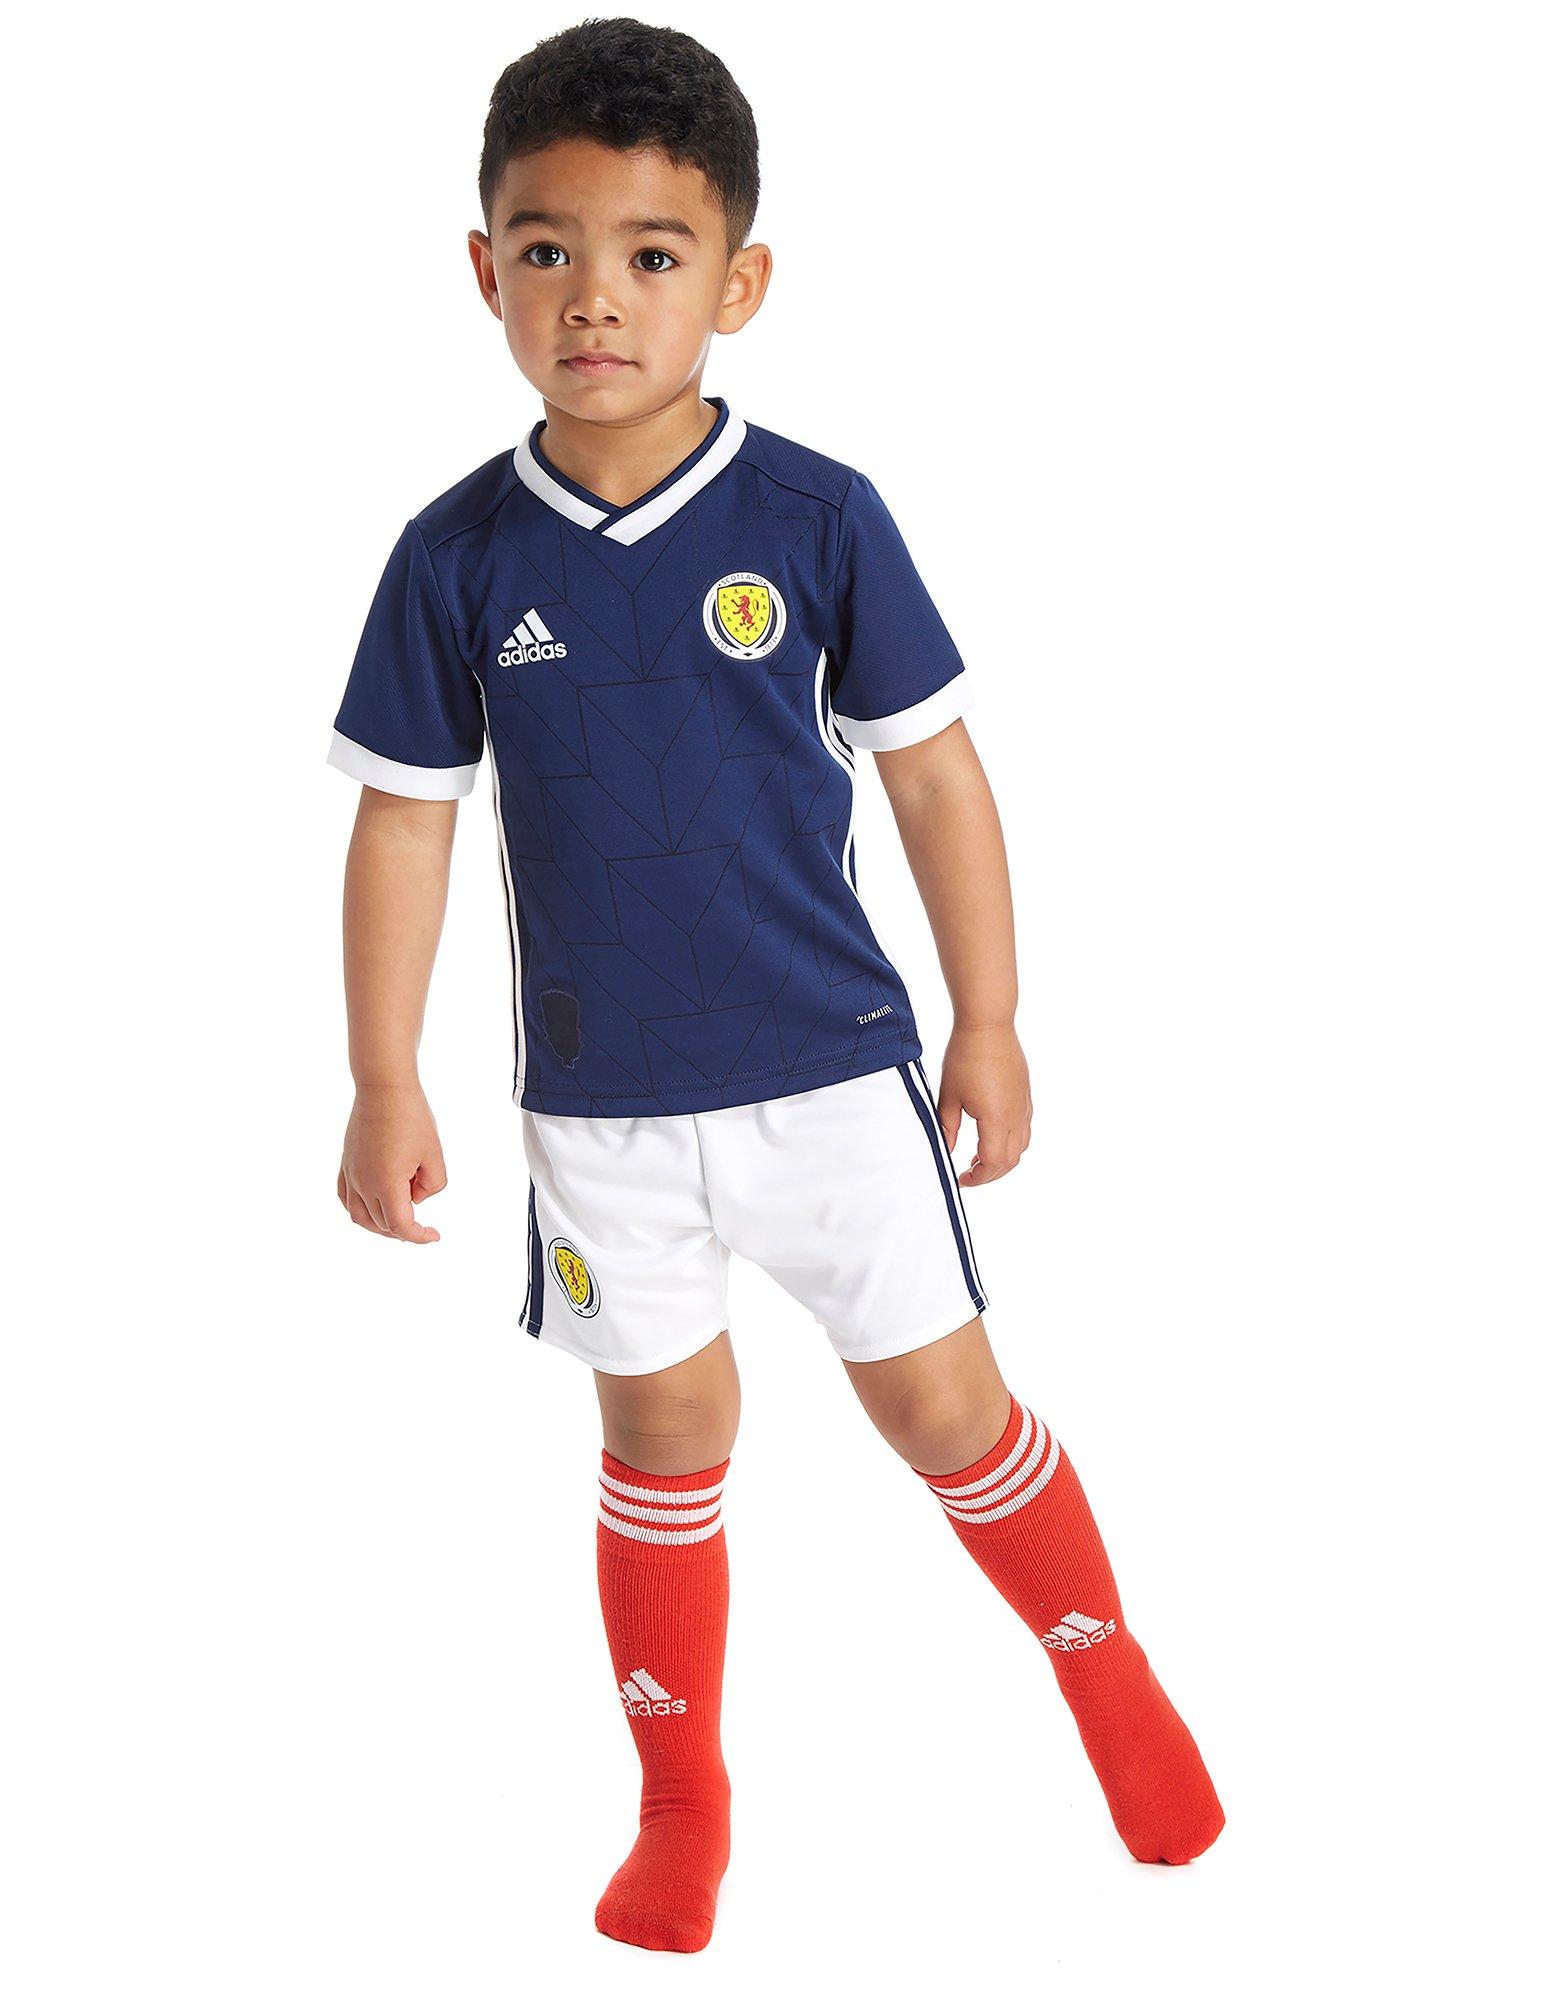 toddler soccer jersey